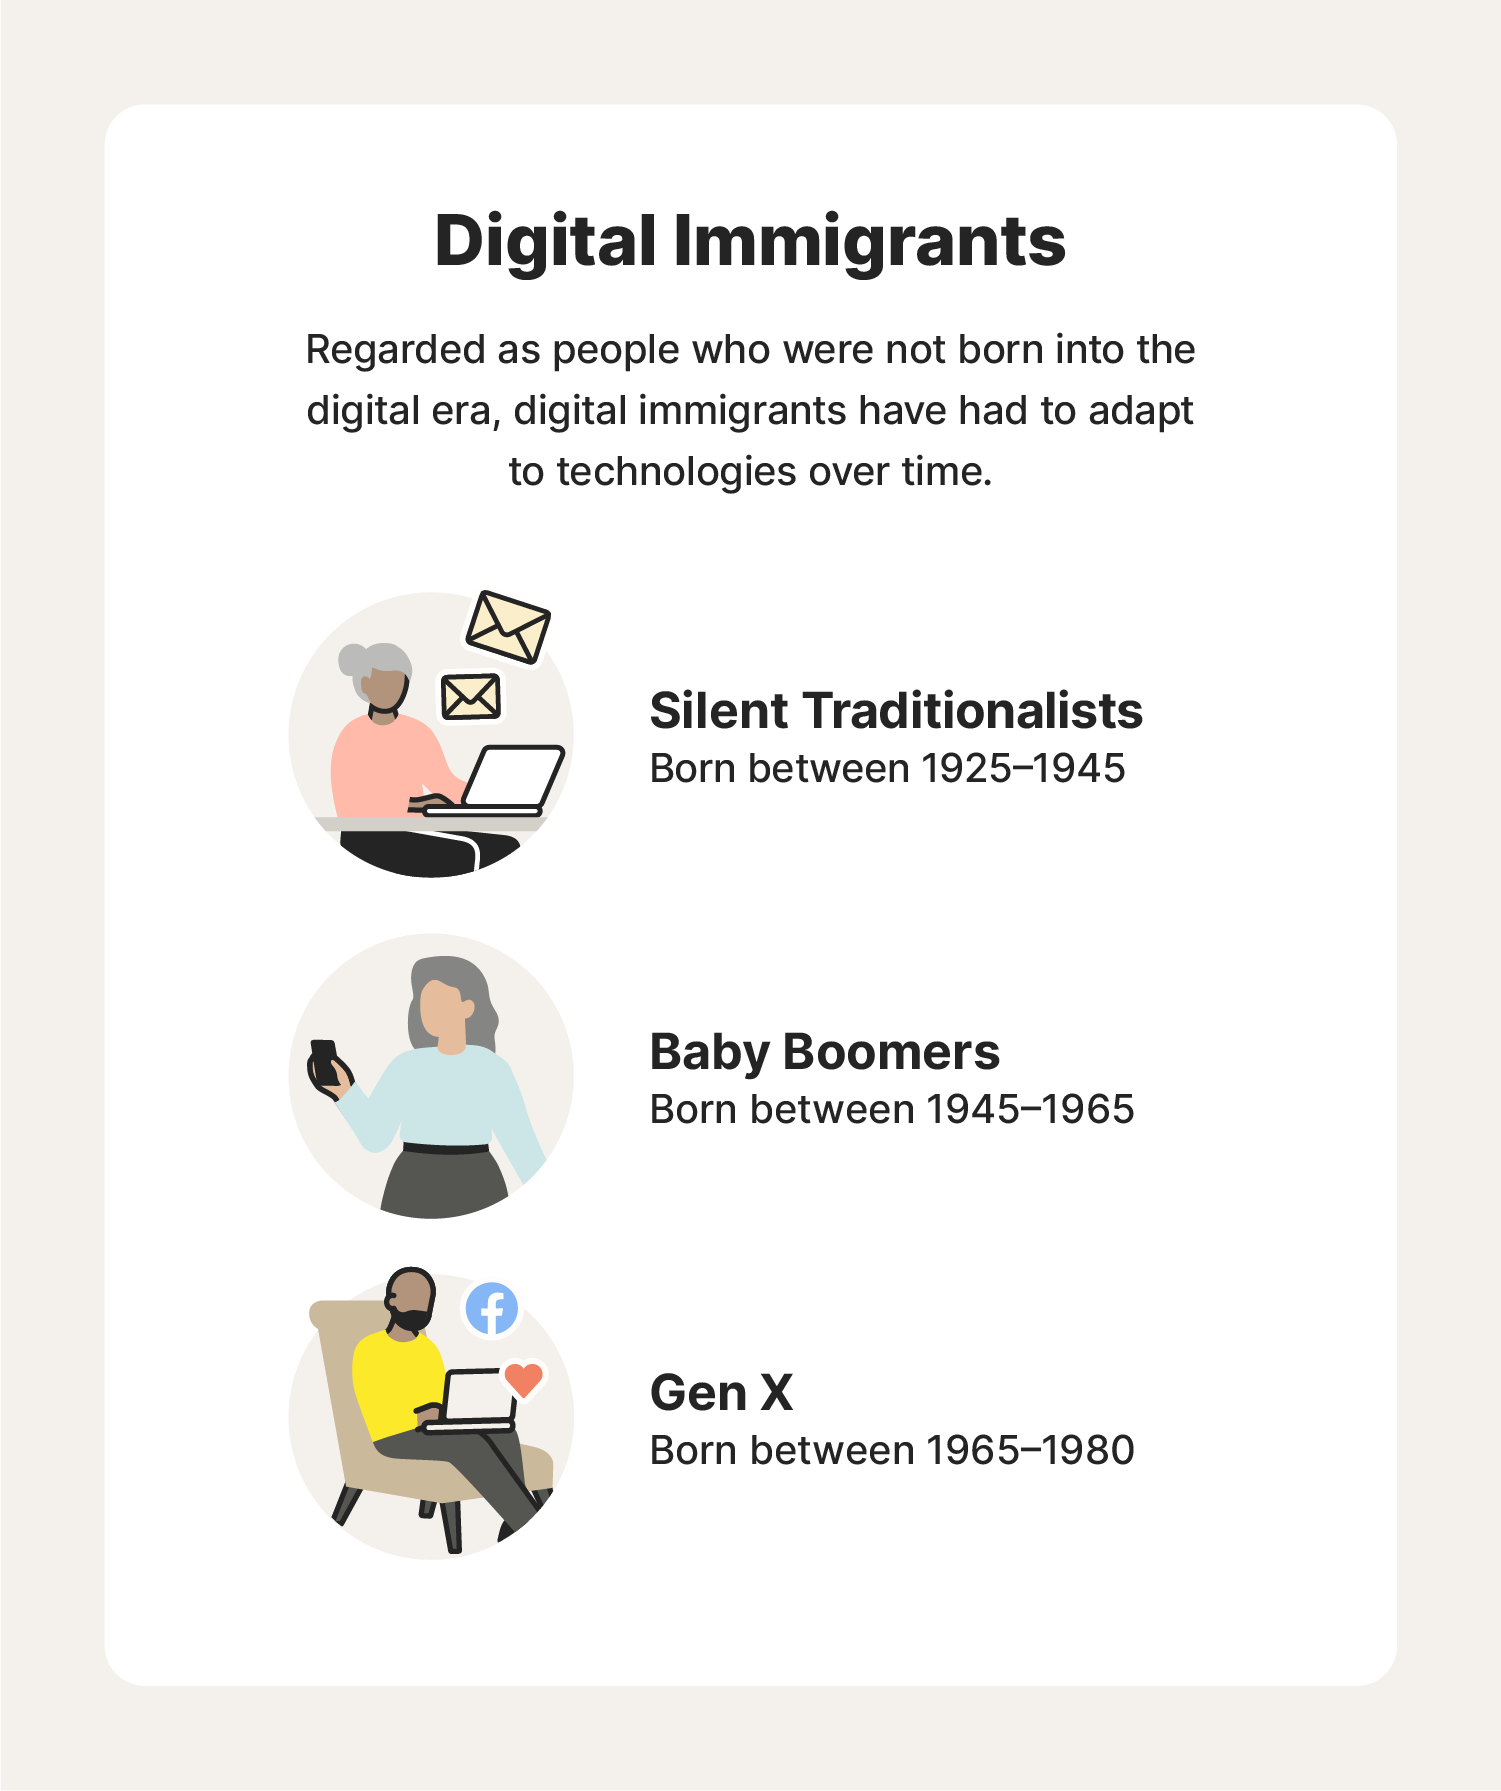 Digital immigrants